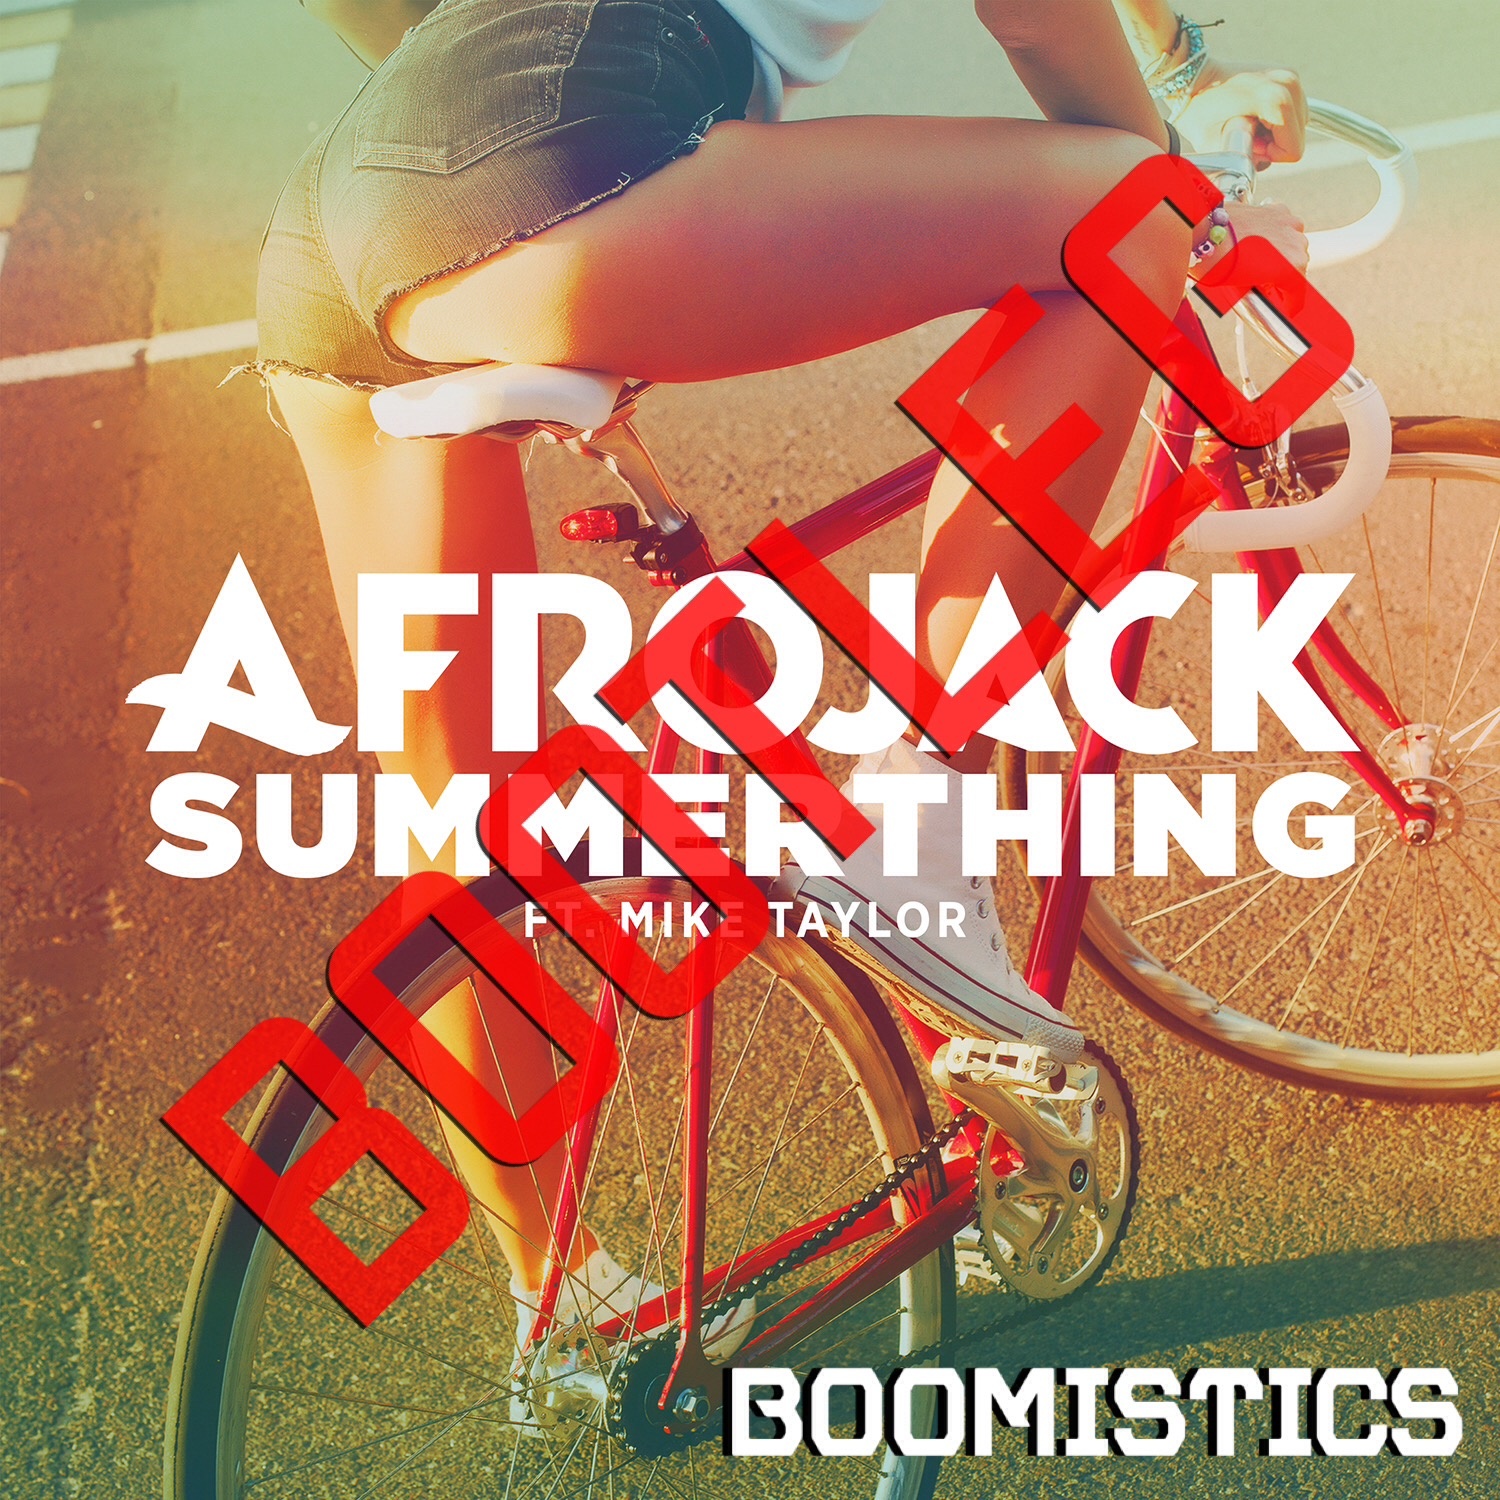 SummerThing! (Boomistics Bootleg)